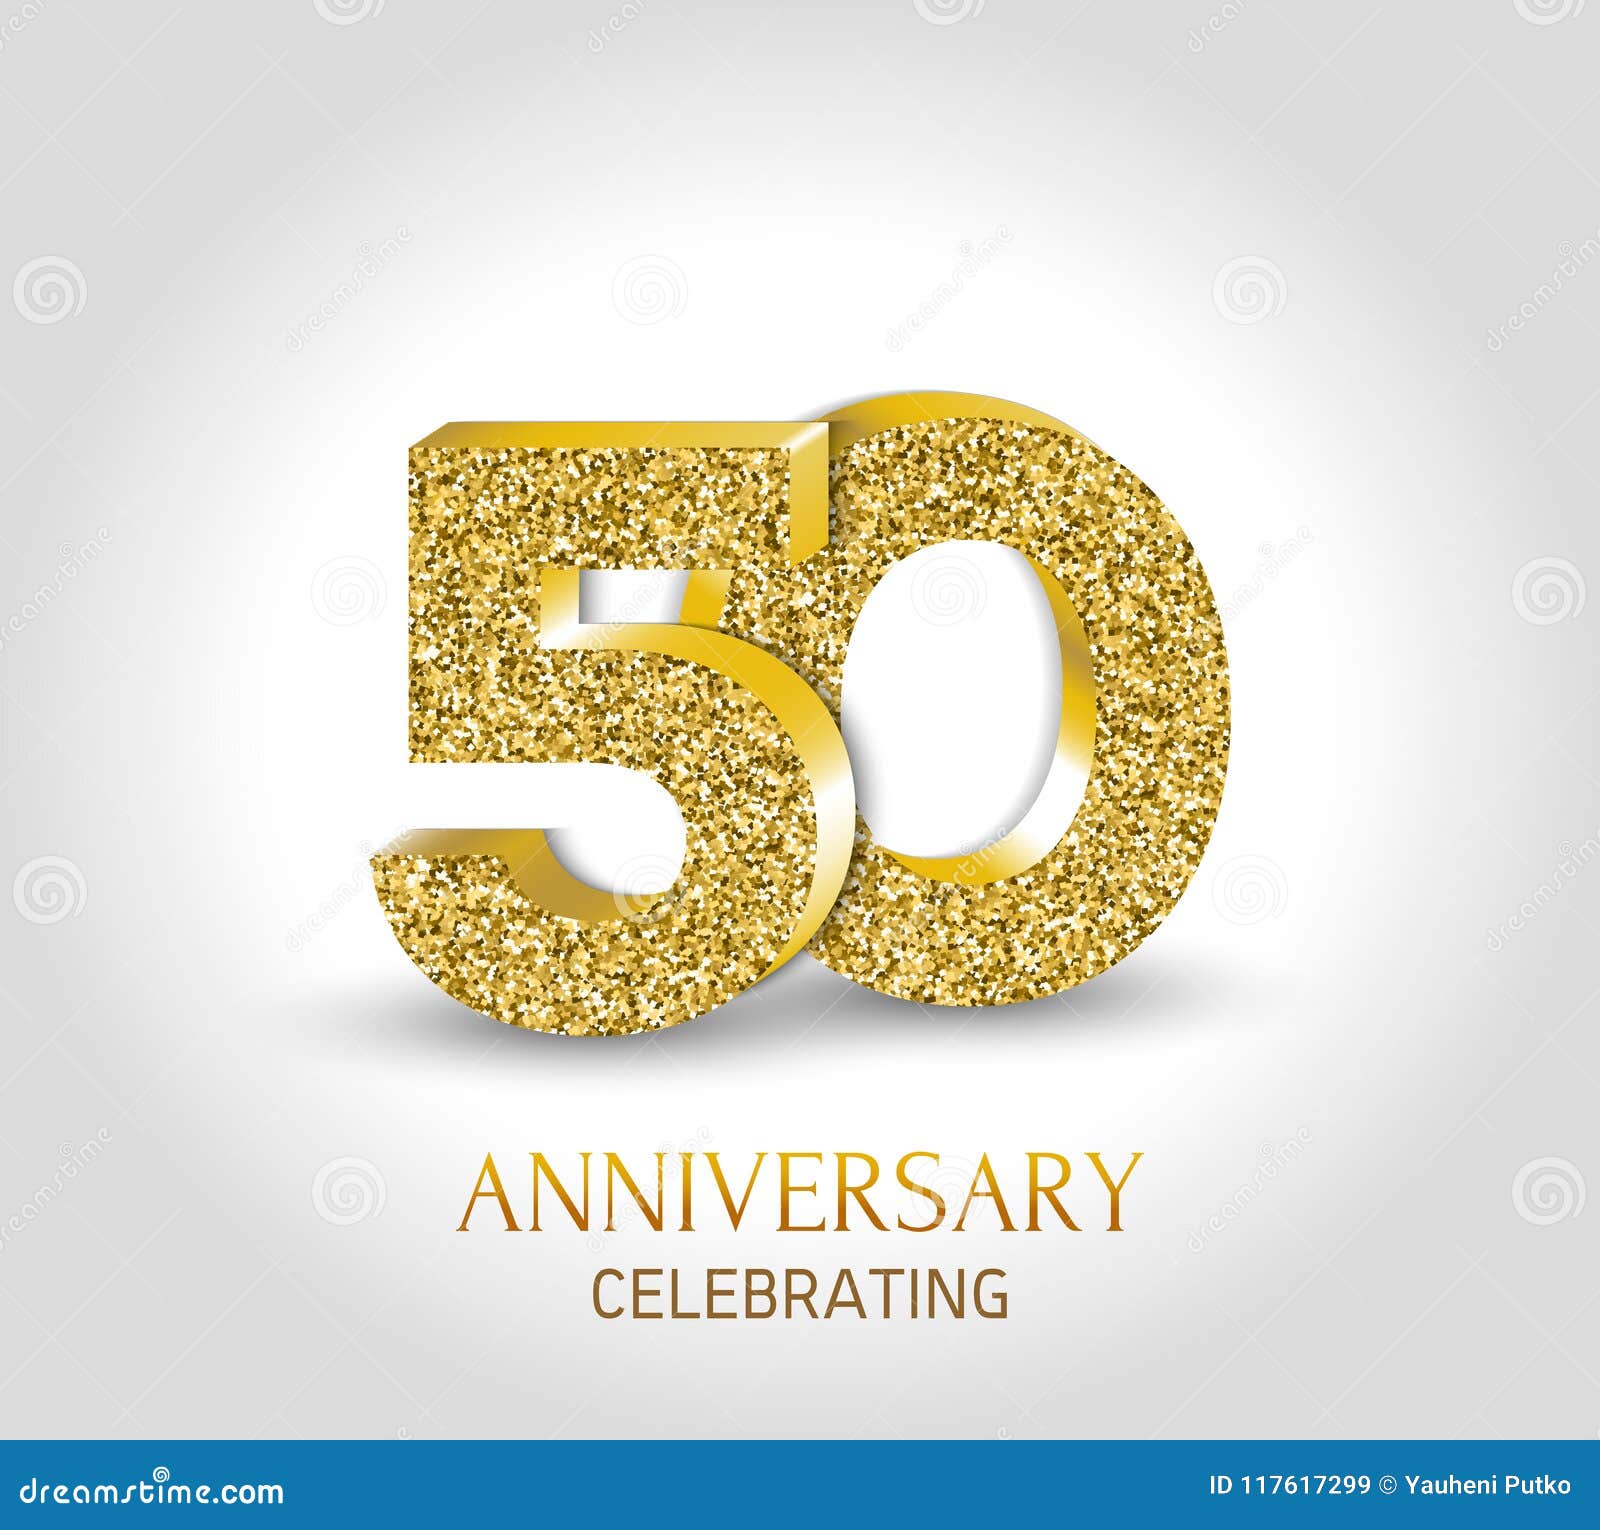 50 Years Logo Gold